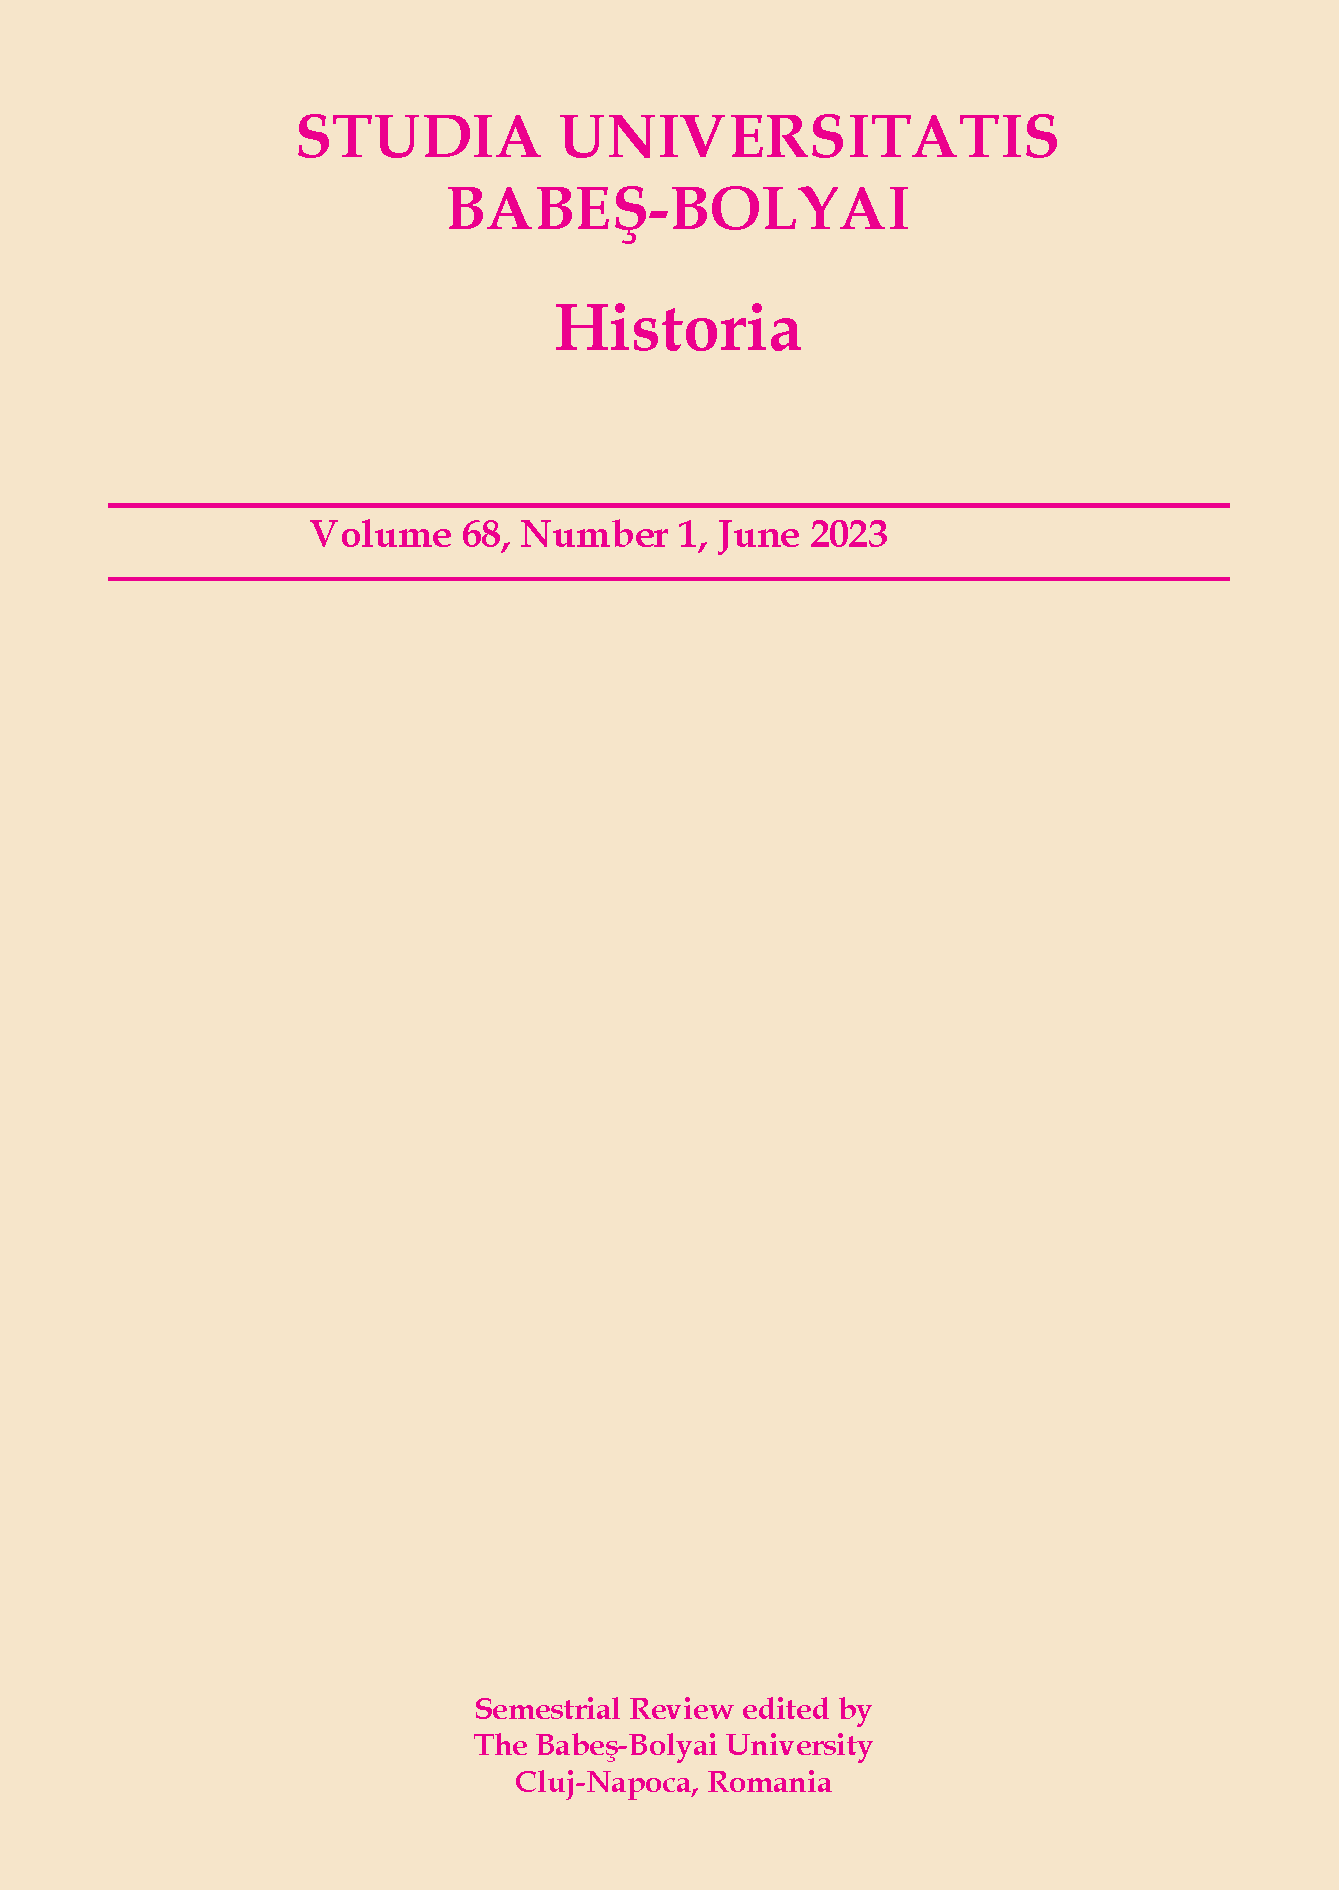 STUDIA UBB HISTORIA, Volume 68 (LXVIII), No. 1, June 2023